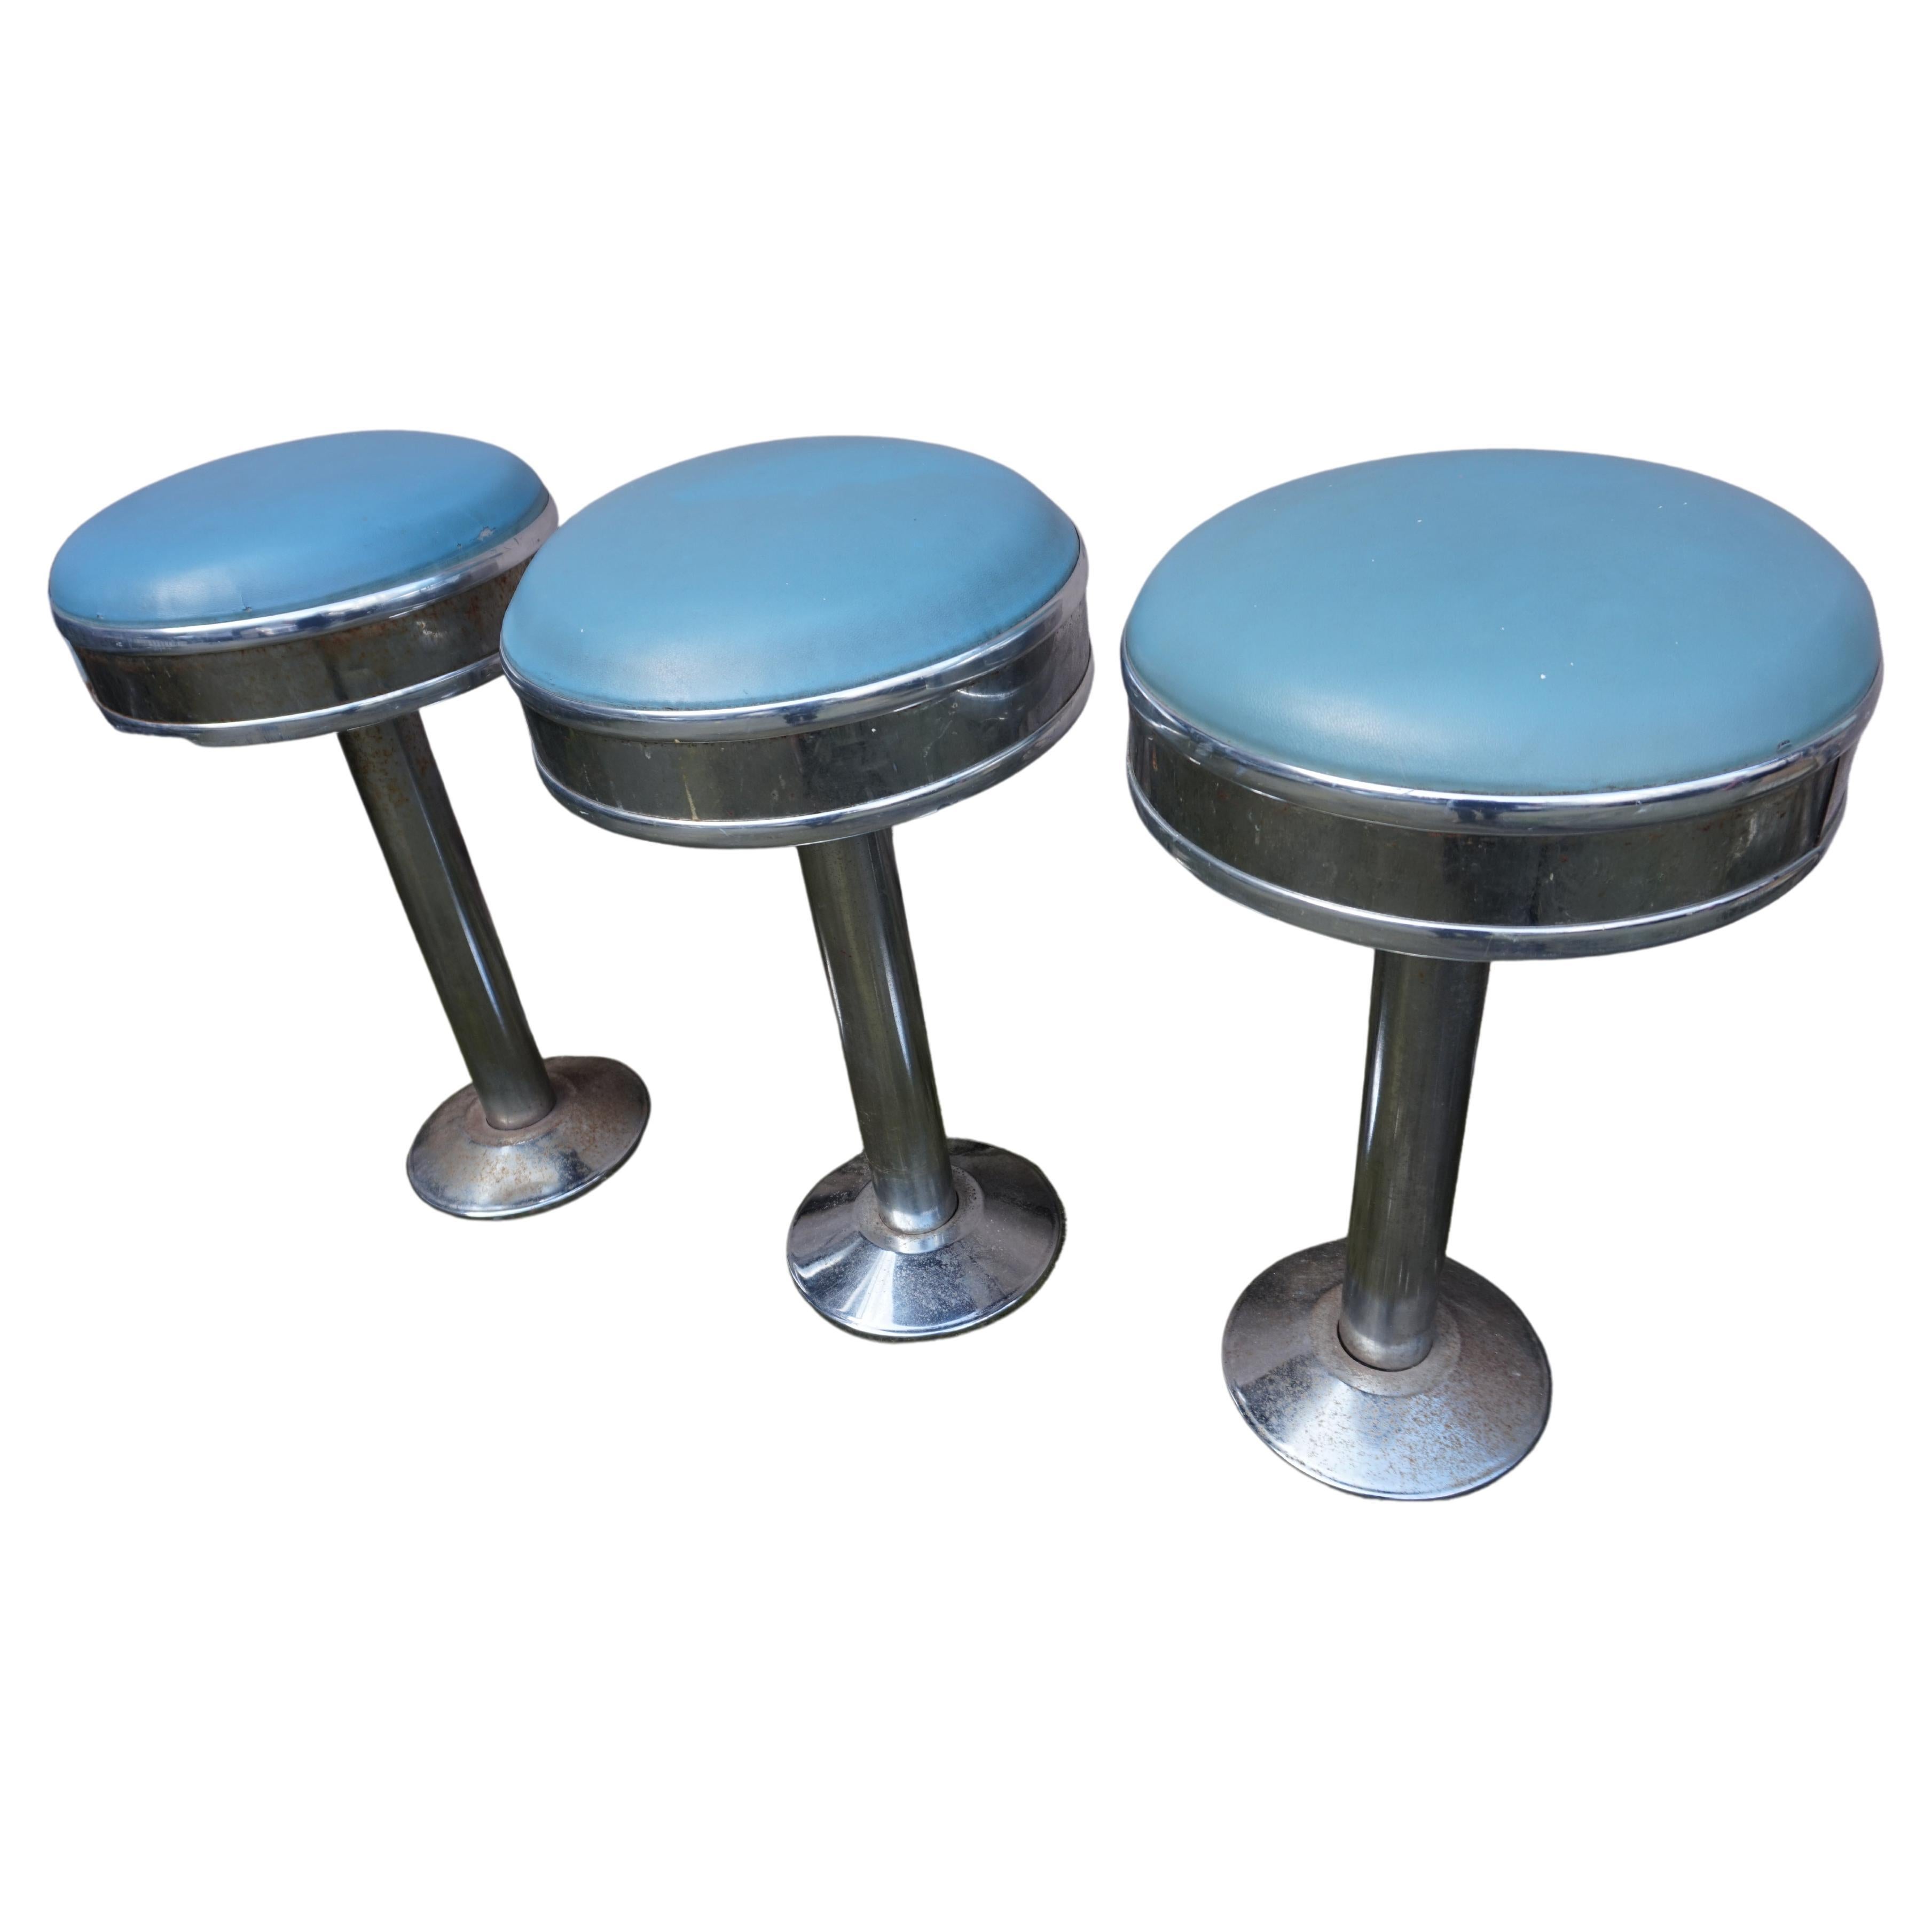 Set of 3 Chrome Art Deco Counter Barstools with Original Seats & Patina